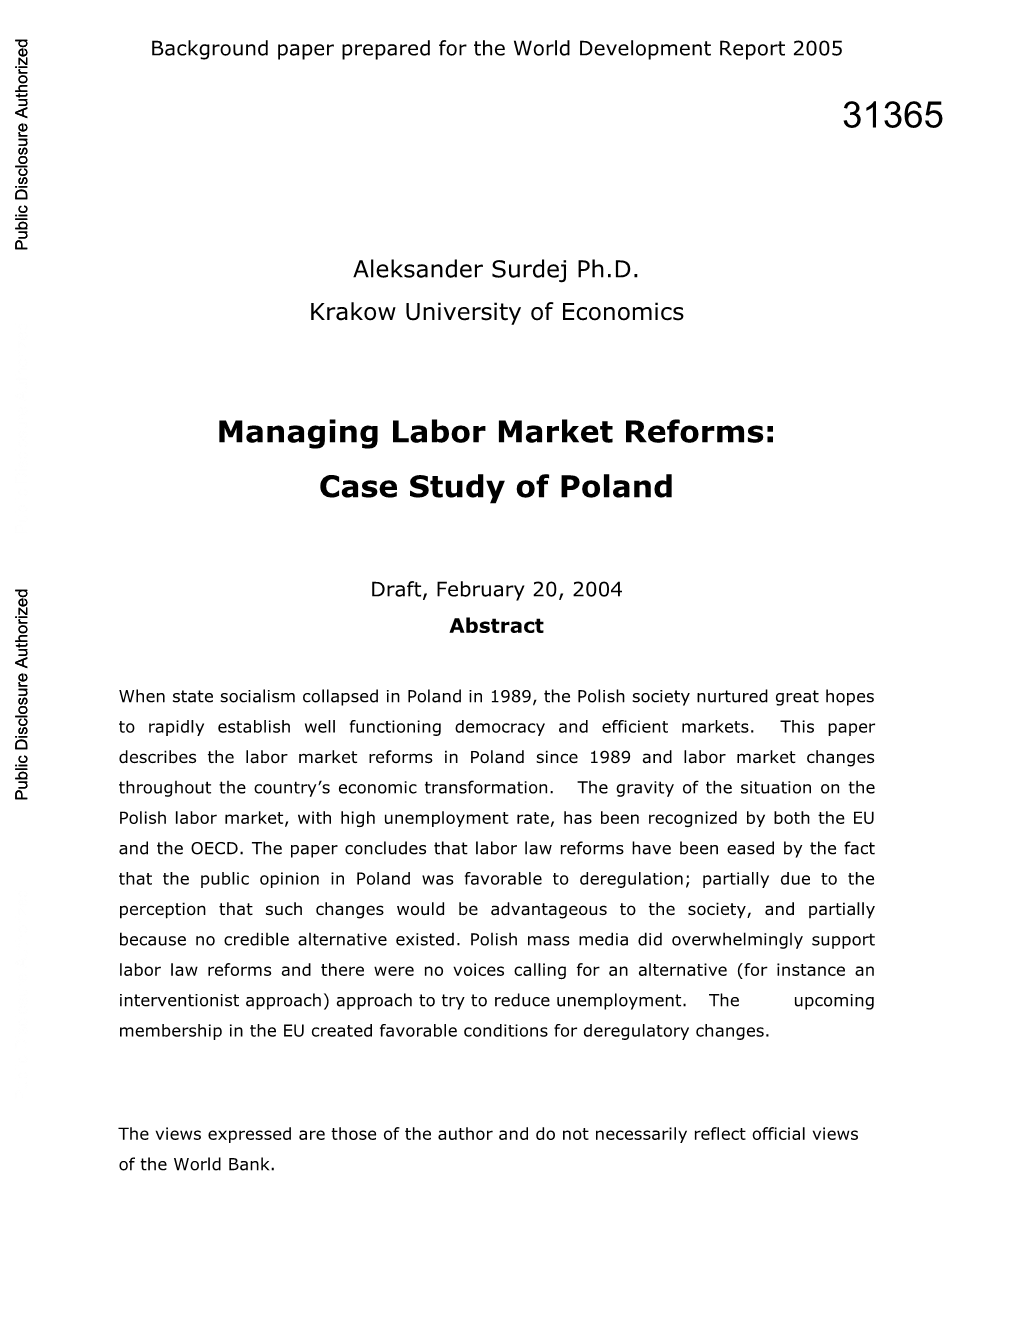 Managing Labor Market Reforms: Case Study of Poland Public Disclosure Authorized